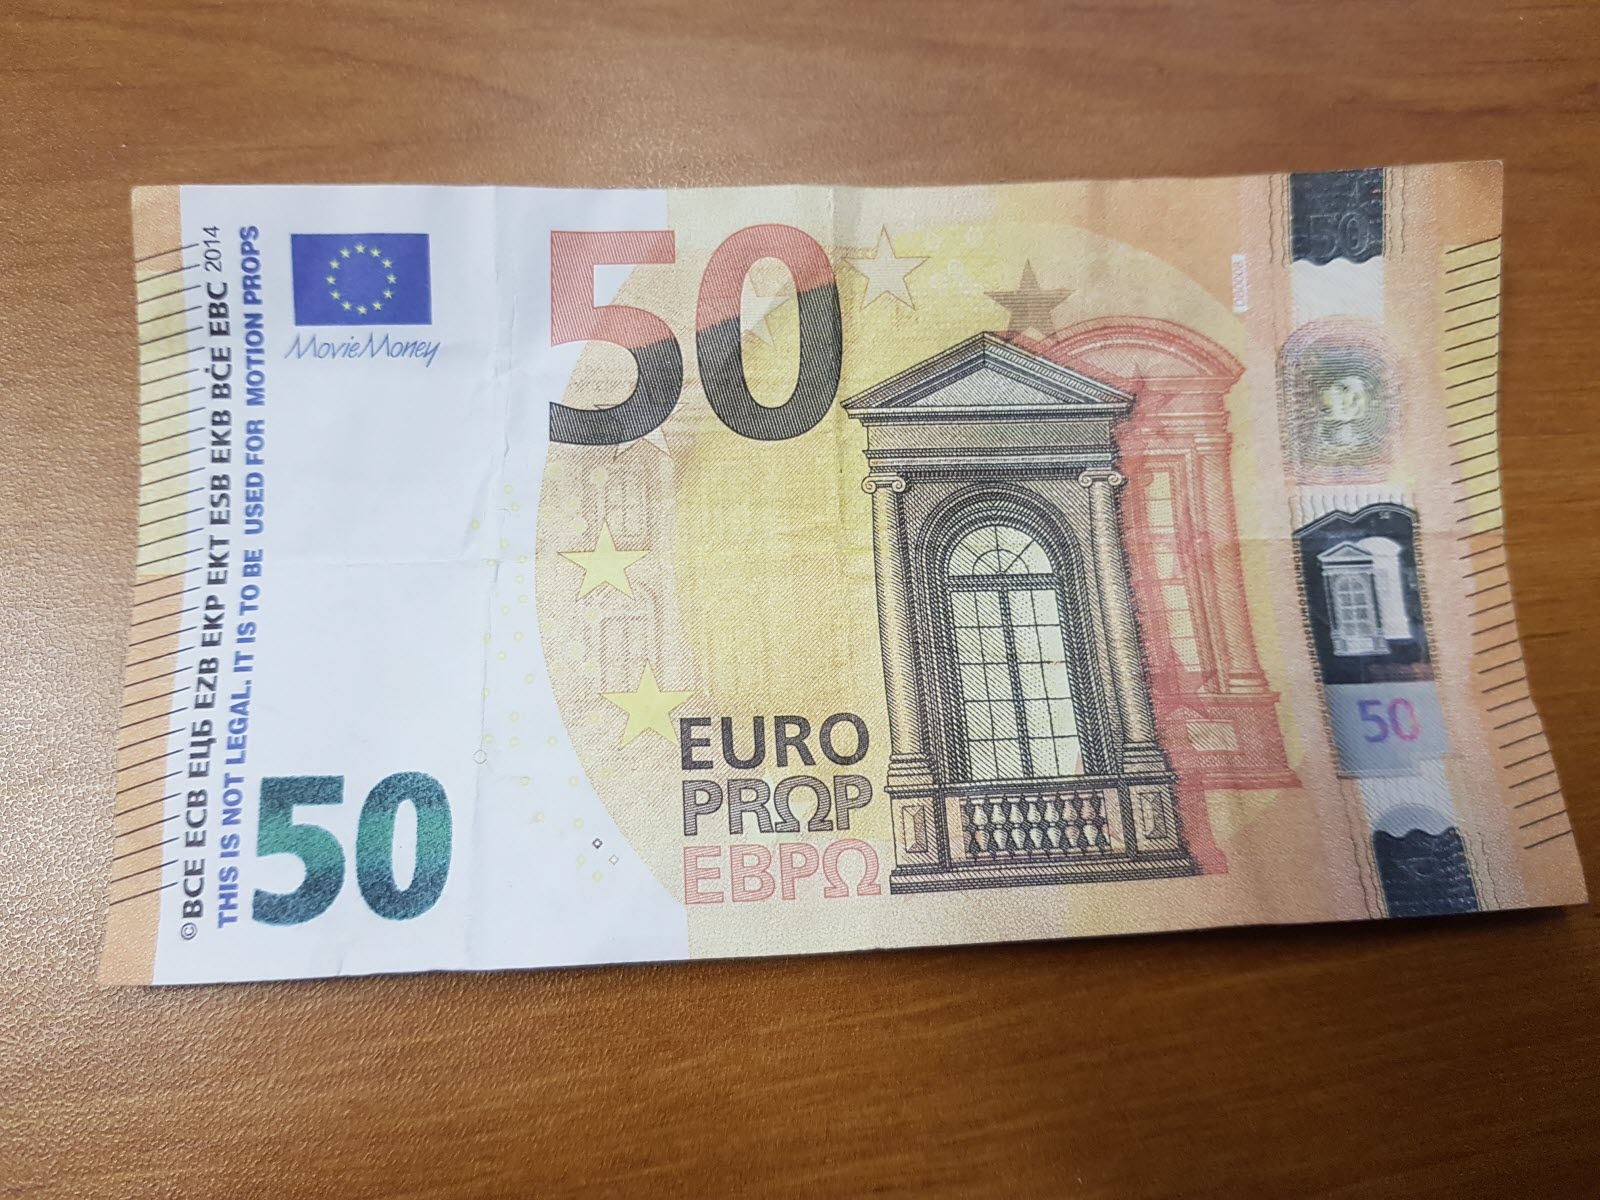 Billet De 50 Euros A Imprimer Recto Verso Billet De 50 Euros À Imprimer - Arouisse.com